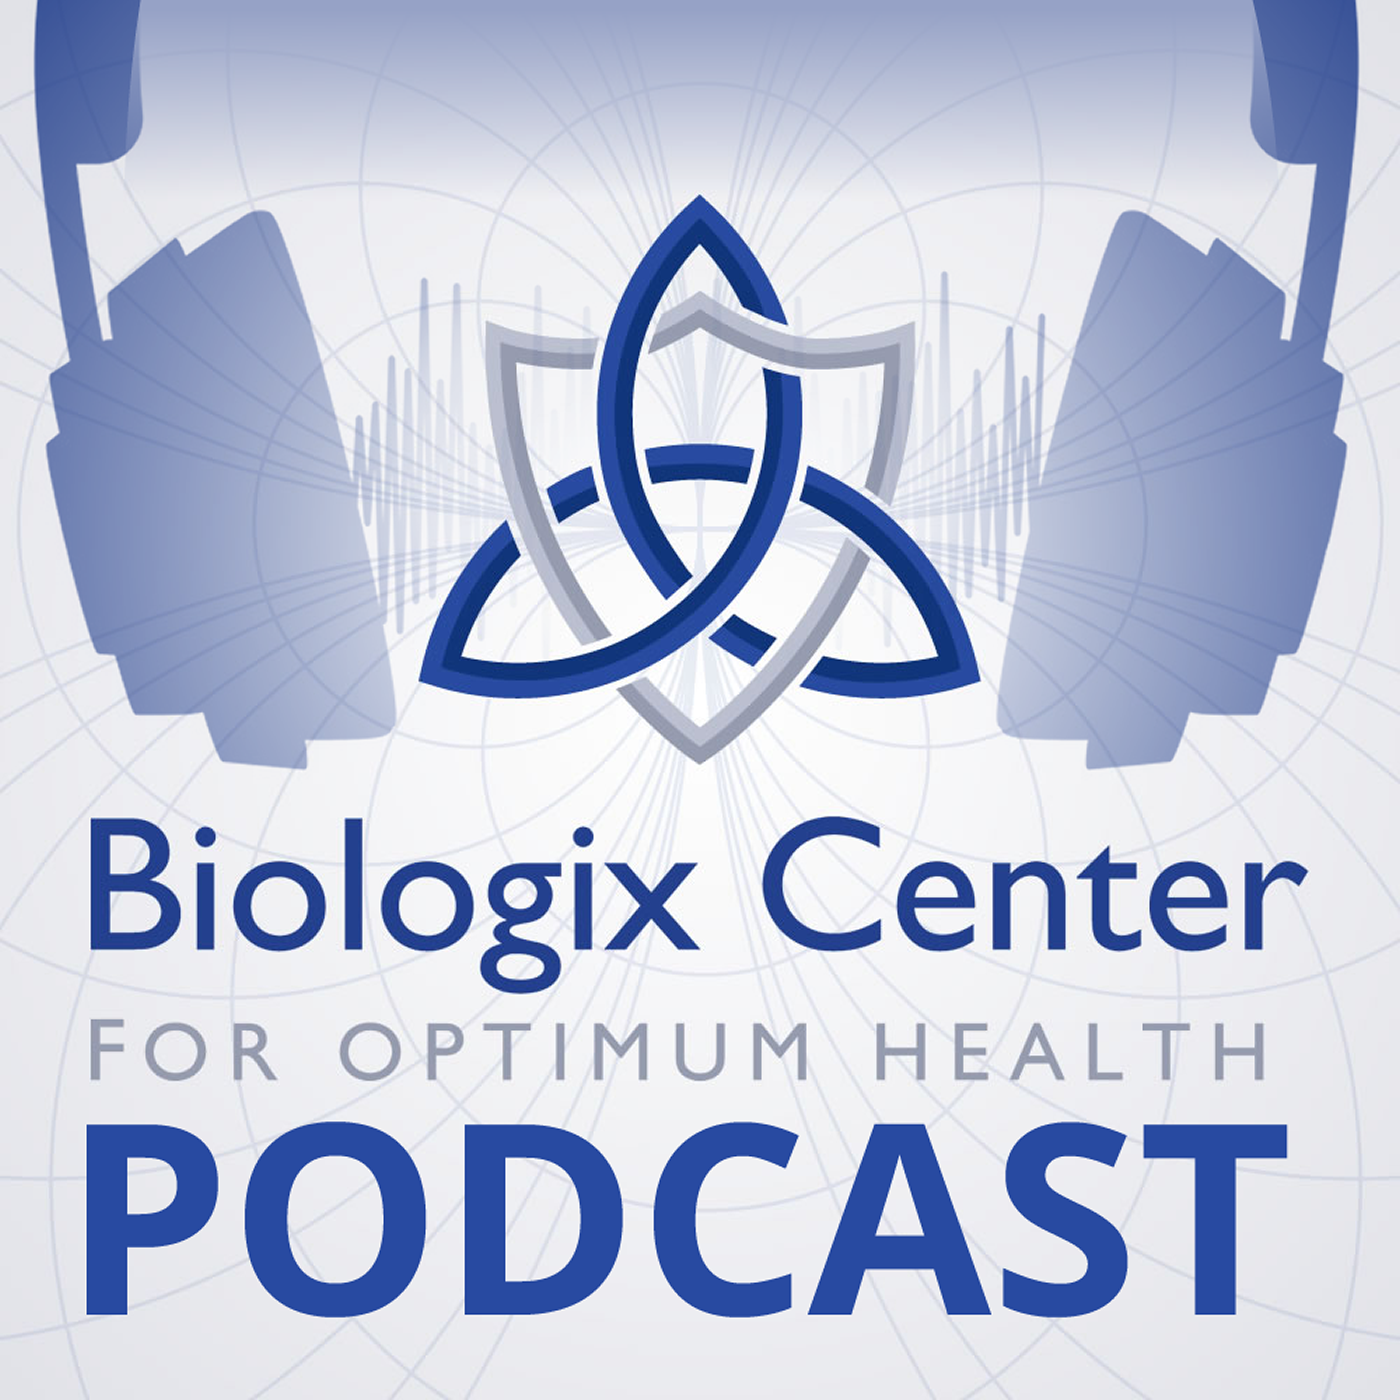 Biologix Center for Optimum Health Podcast